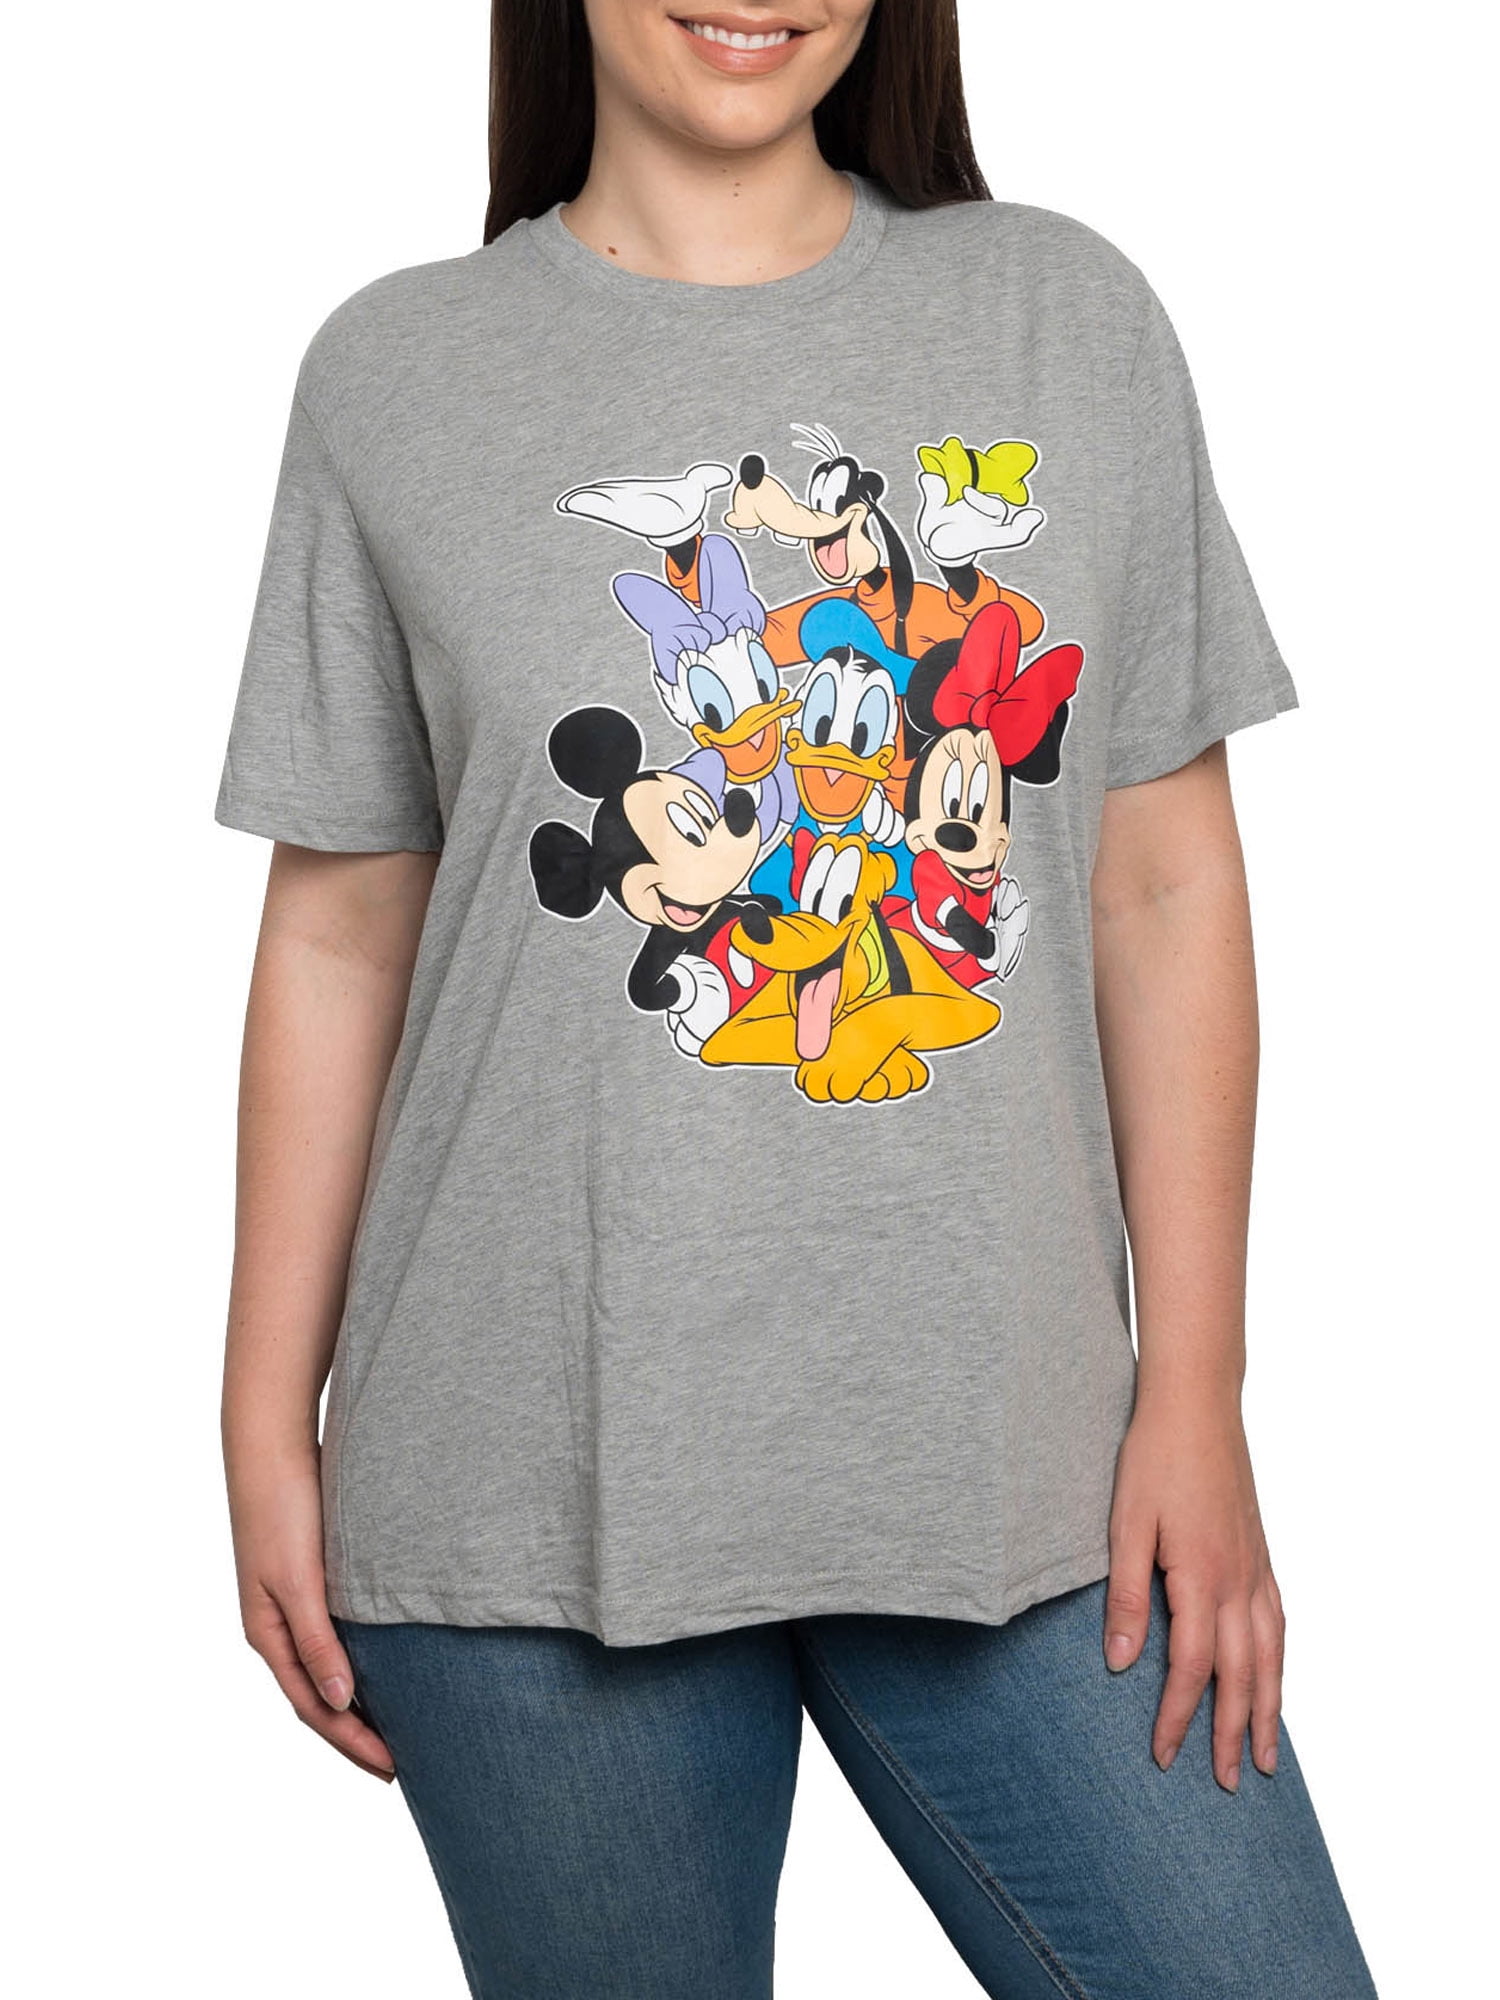 Disney Christmas # 11-8 x 10 Tee Shirt Iron On Transfer Mickey and friends 